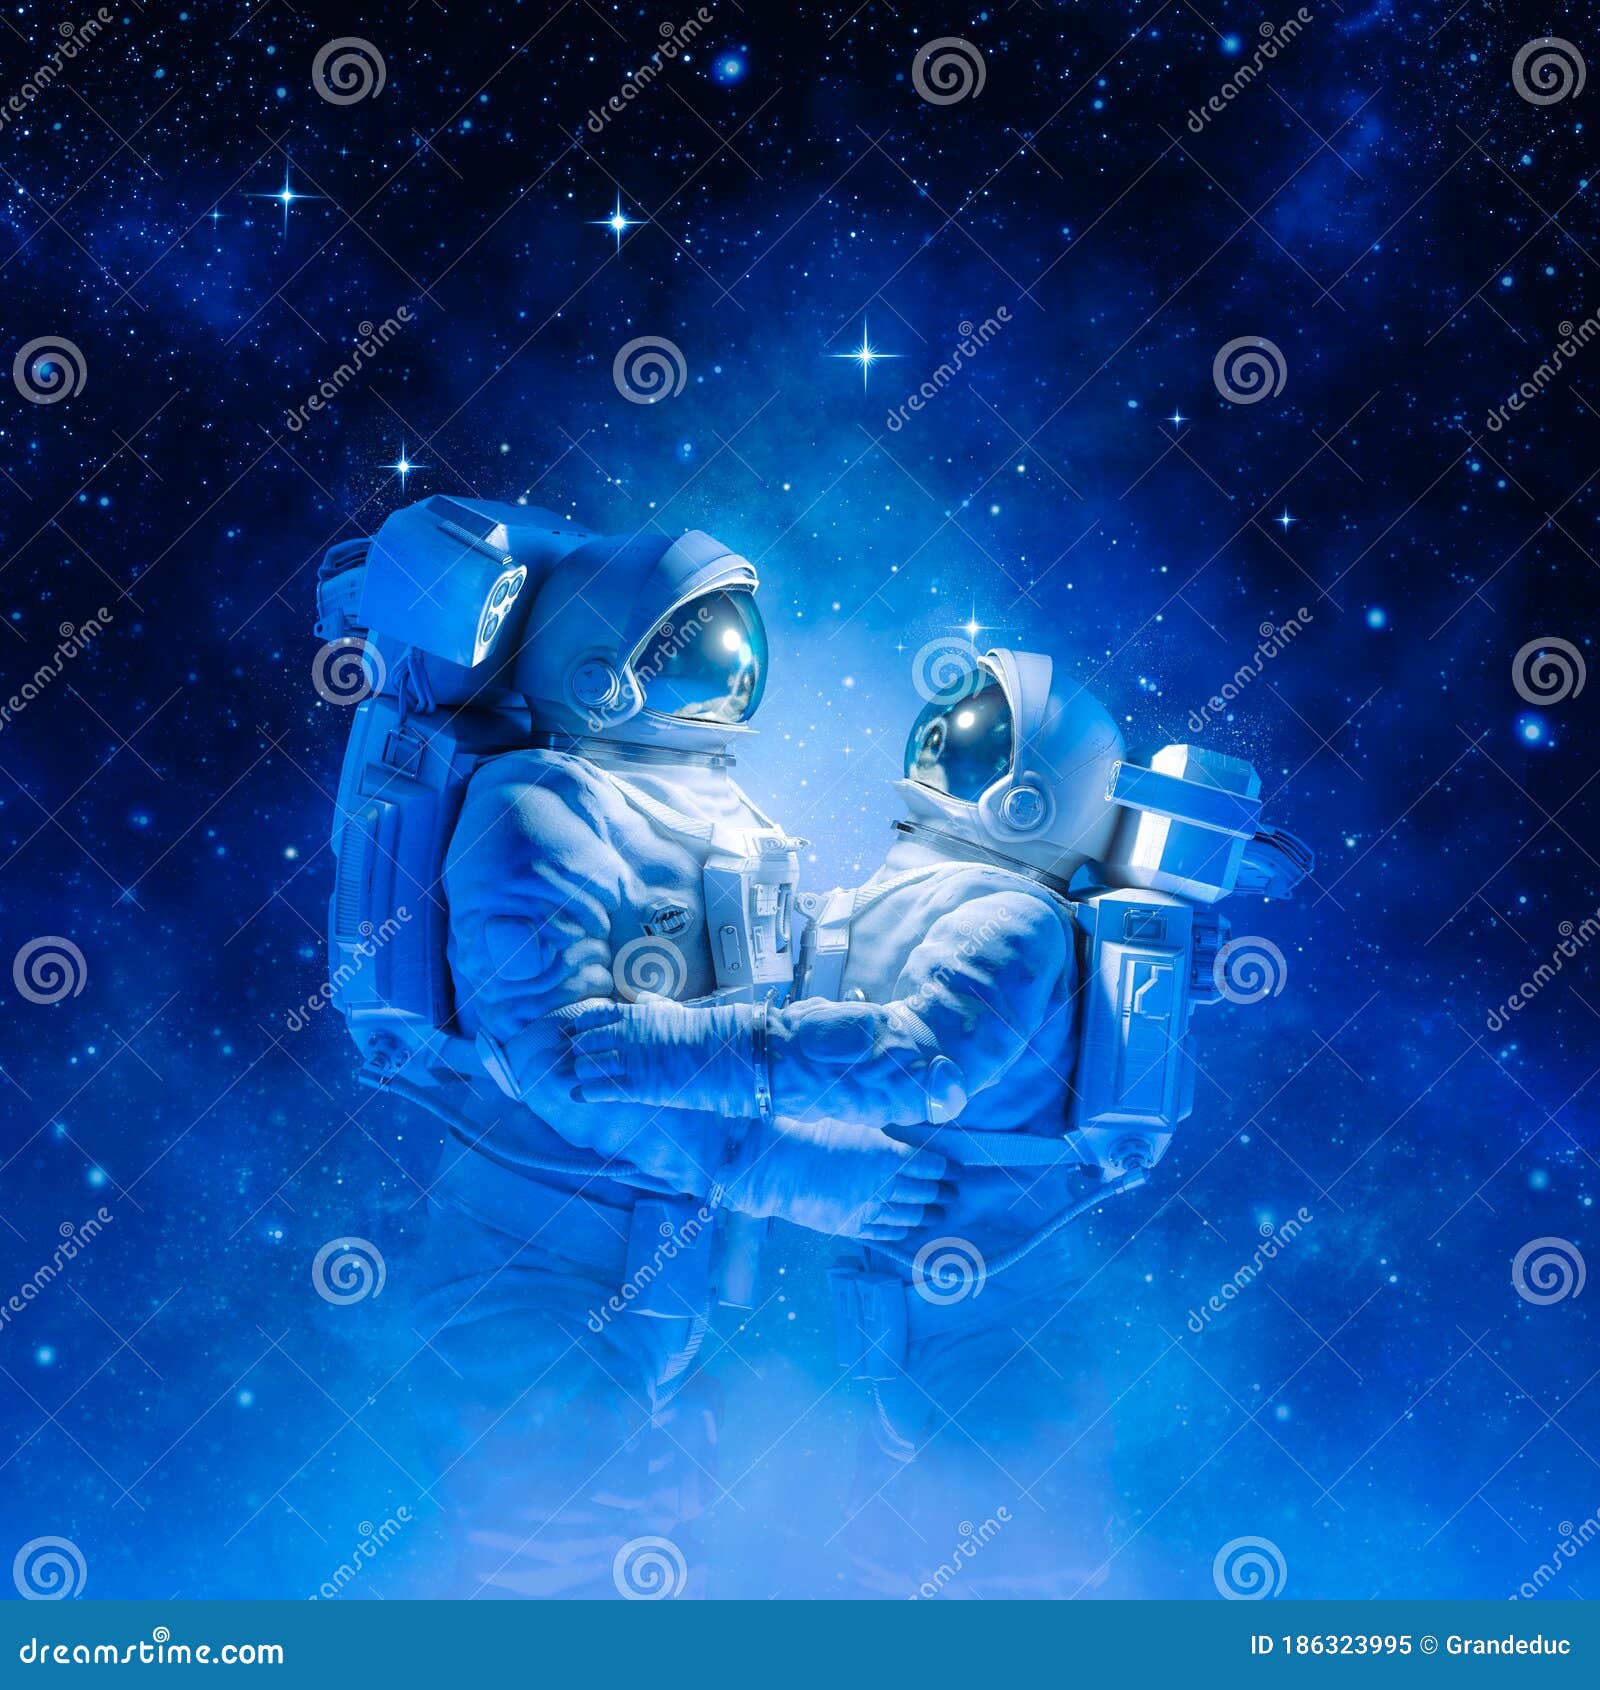 Romance under the stars stock illustration. Illustration of dream